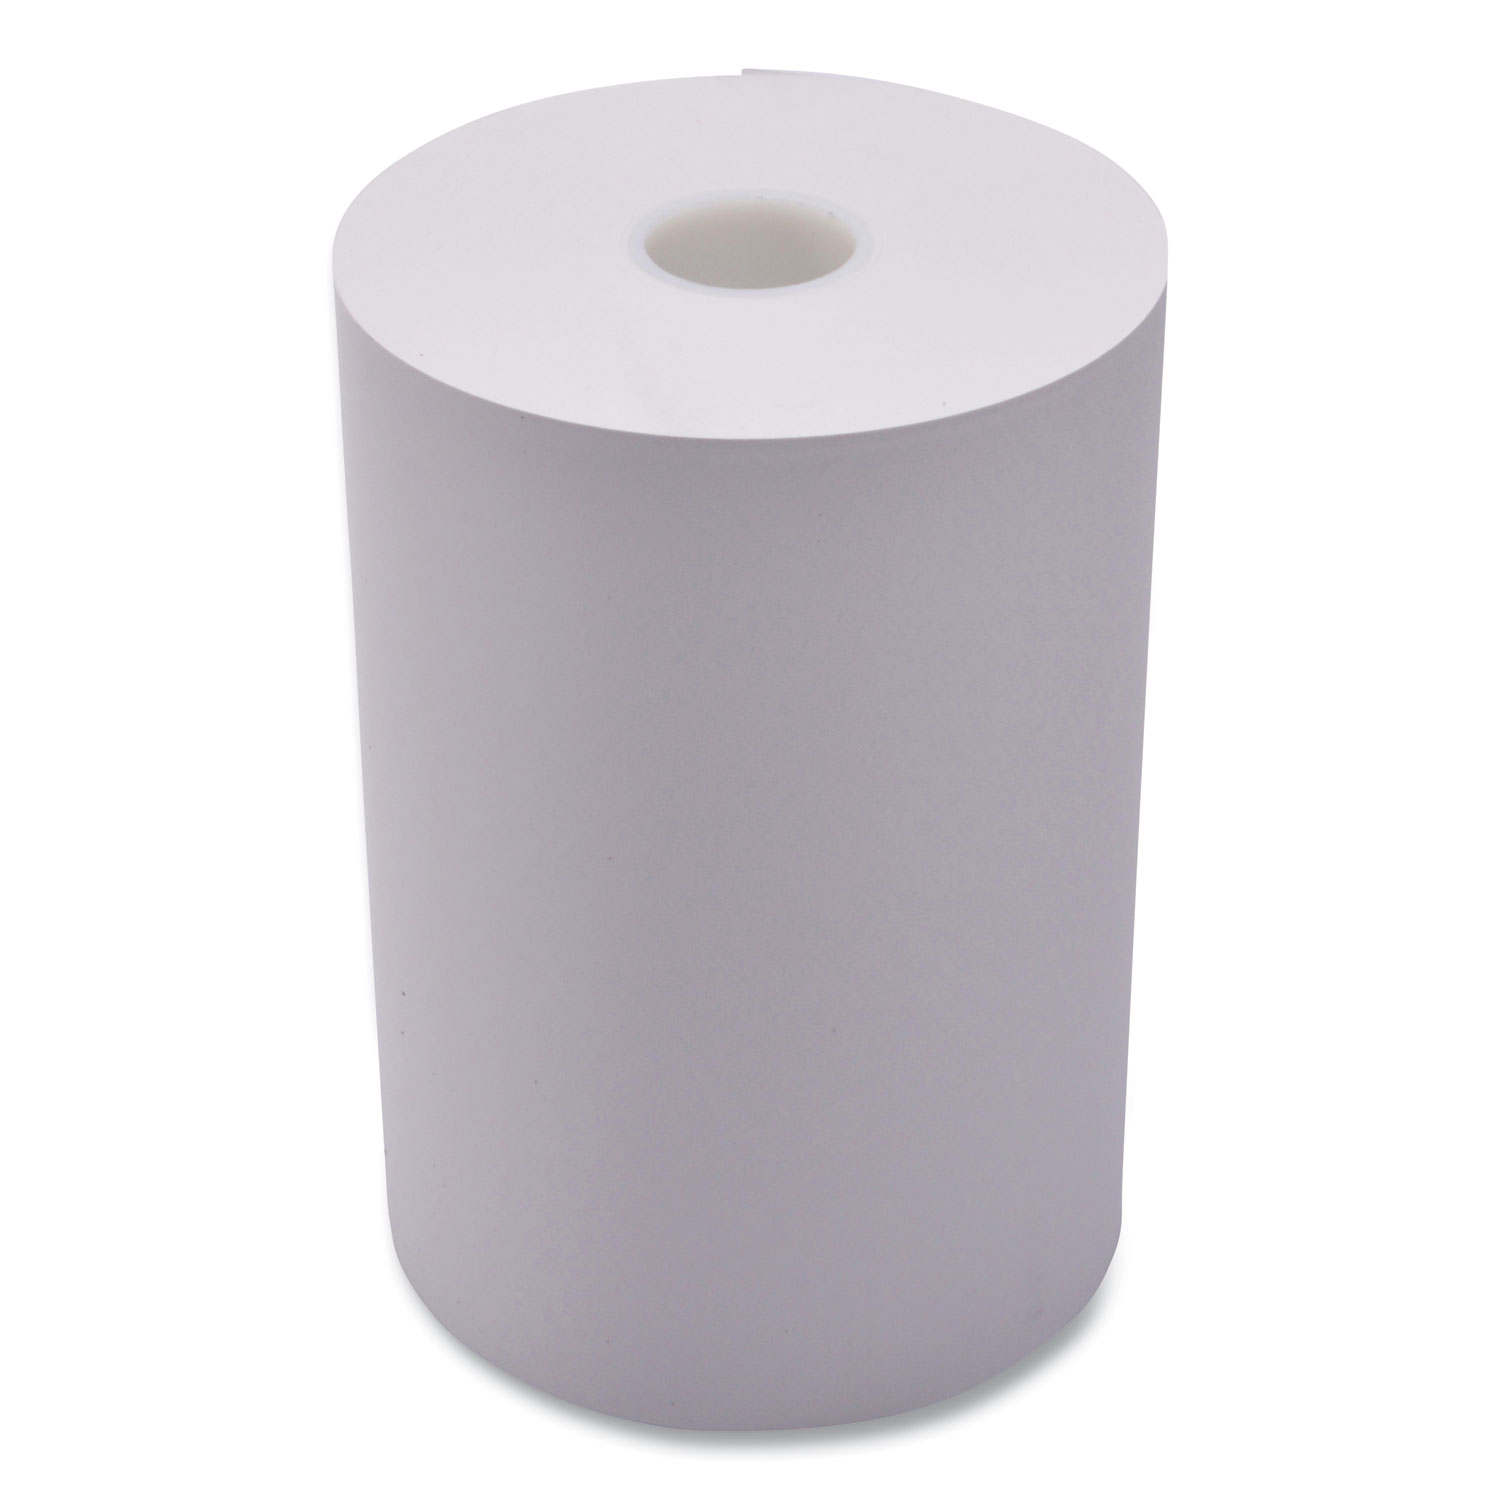 Iconex™ Impact Bond Paper Rolls, 1-Ply, 3.25 x 243 ft, White, 4/Pack